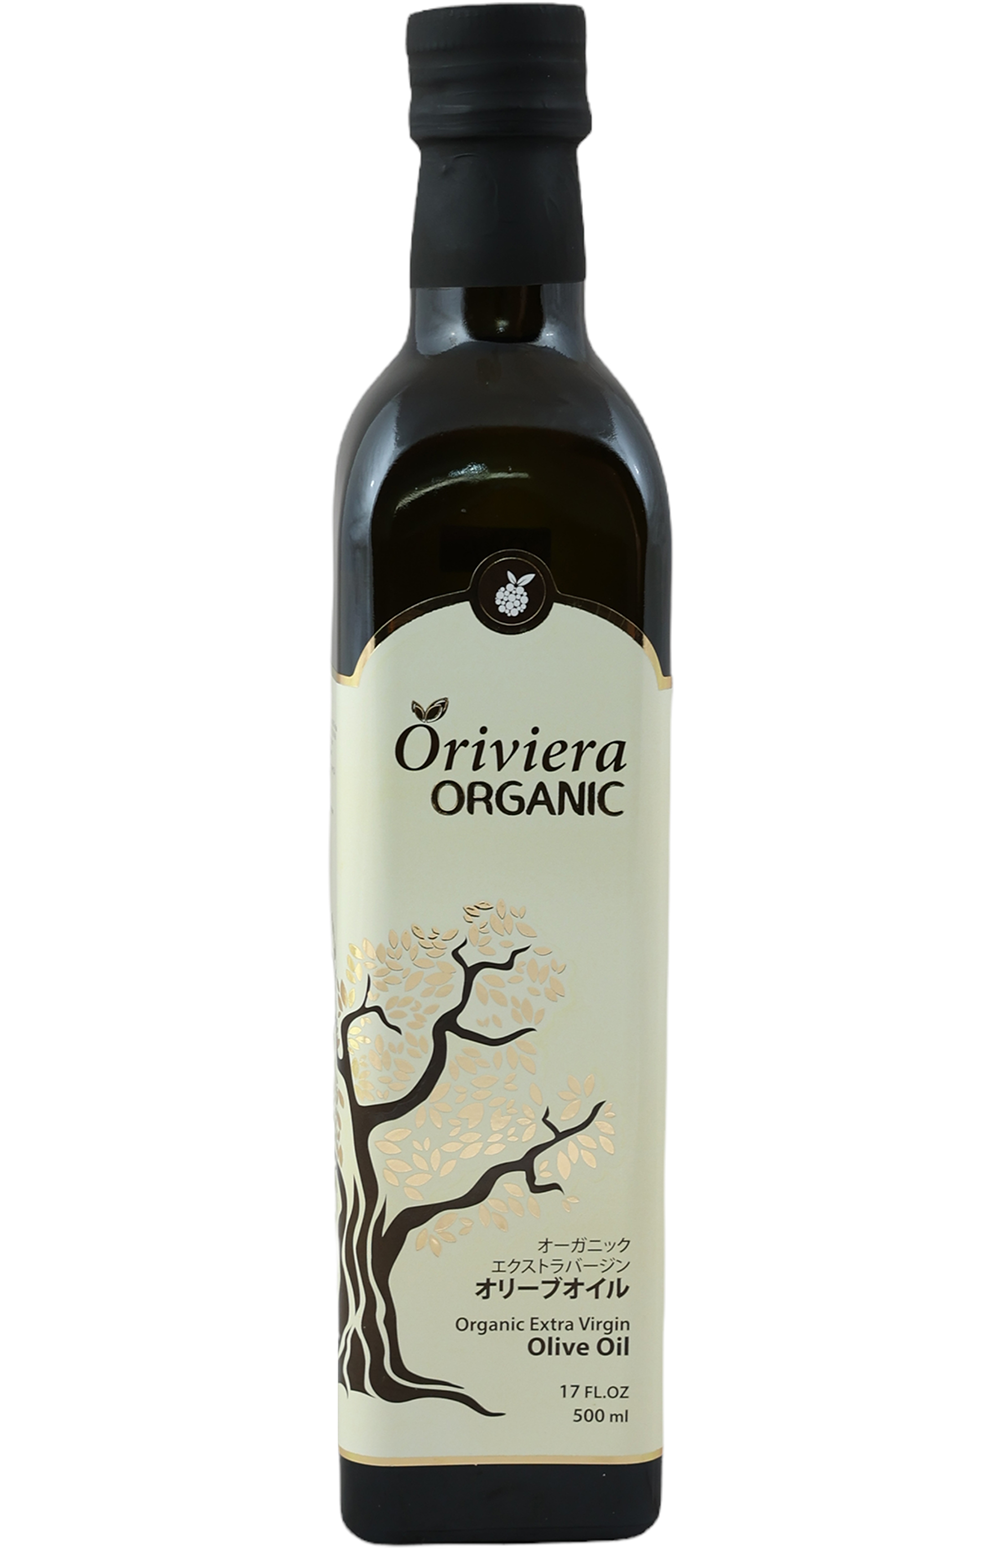 Oliviera Organic